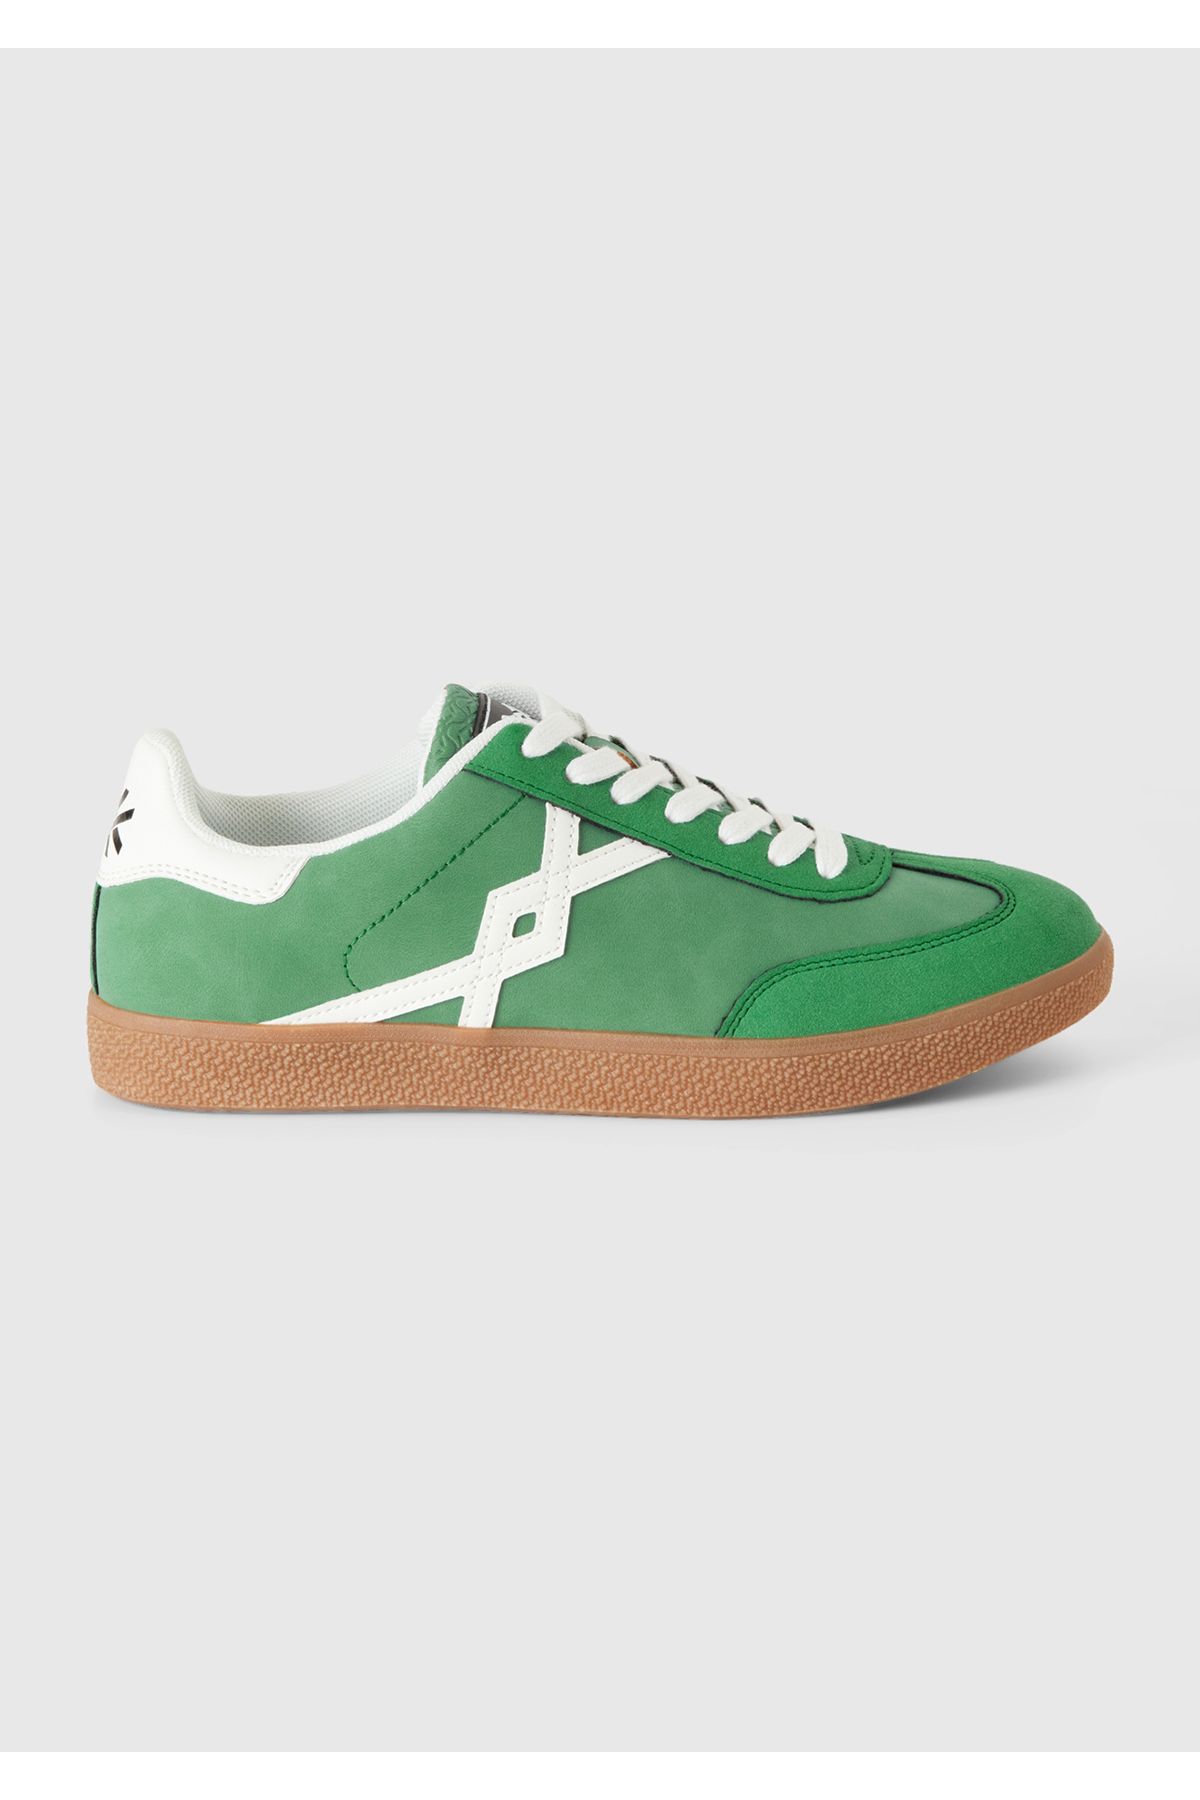 United Colors of Benetton Unisex Yeşil Sneaker